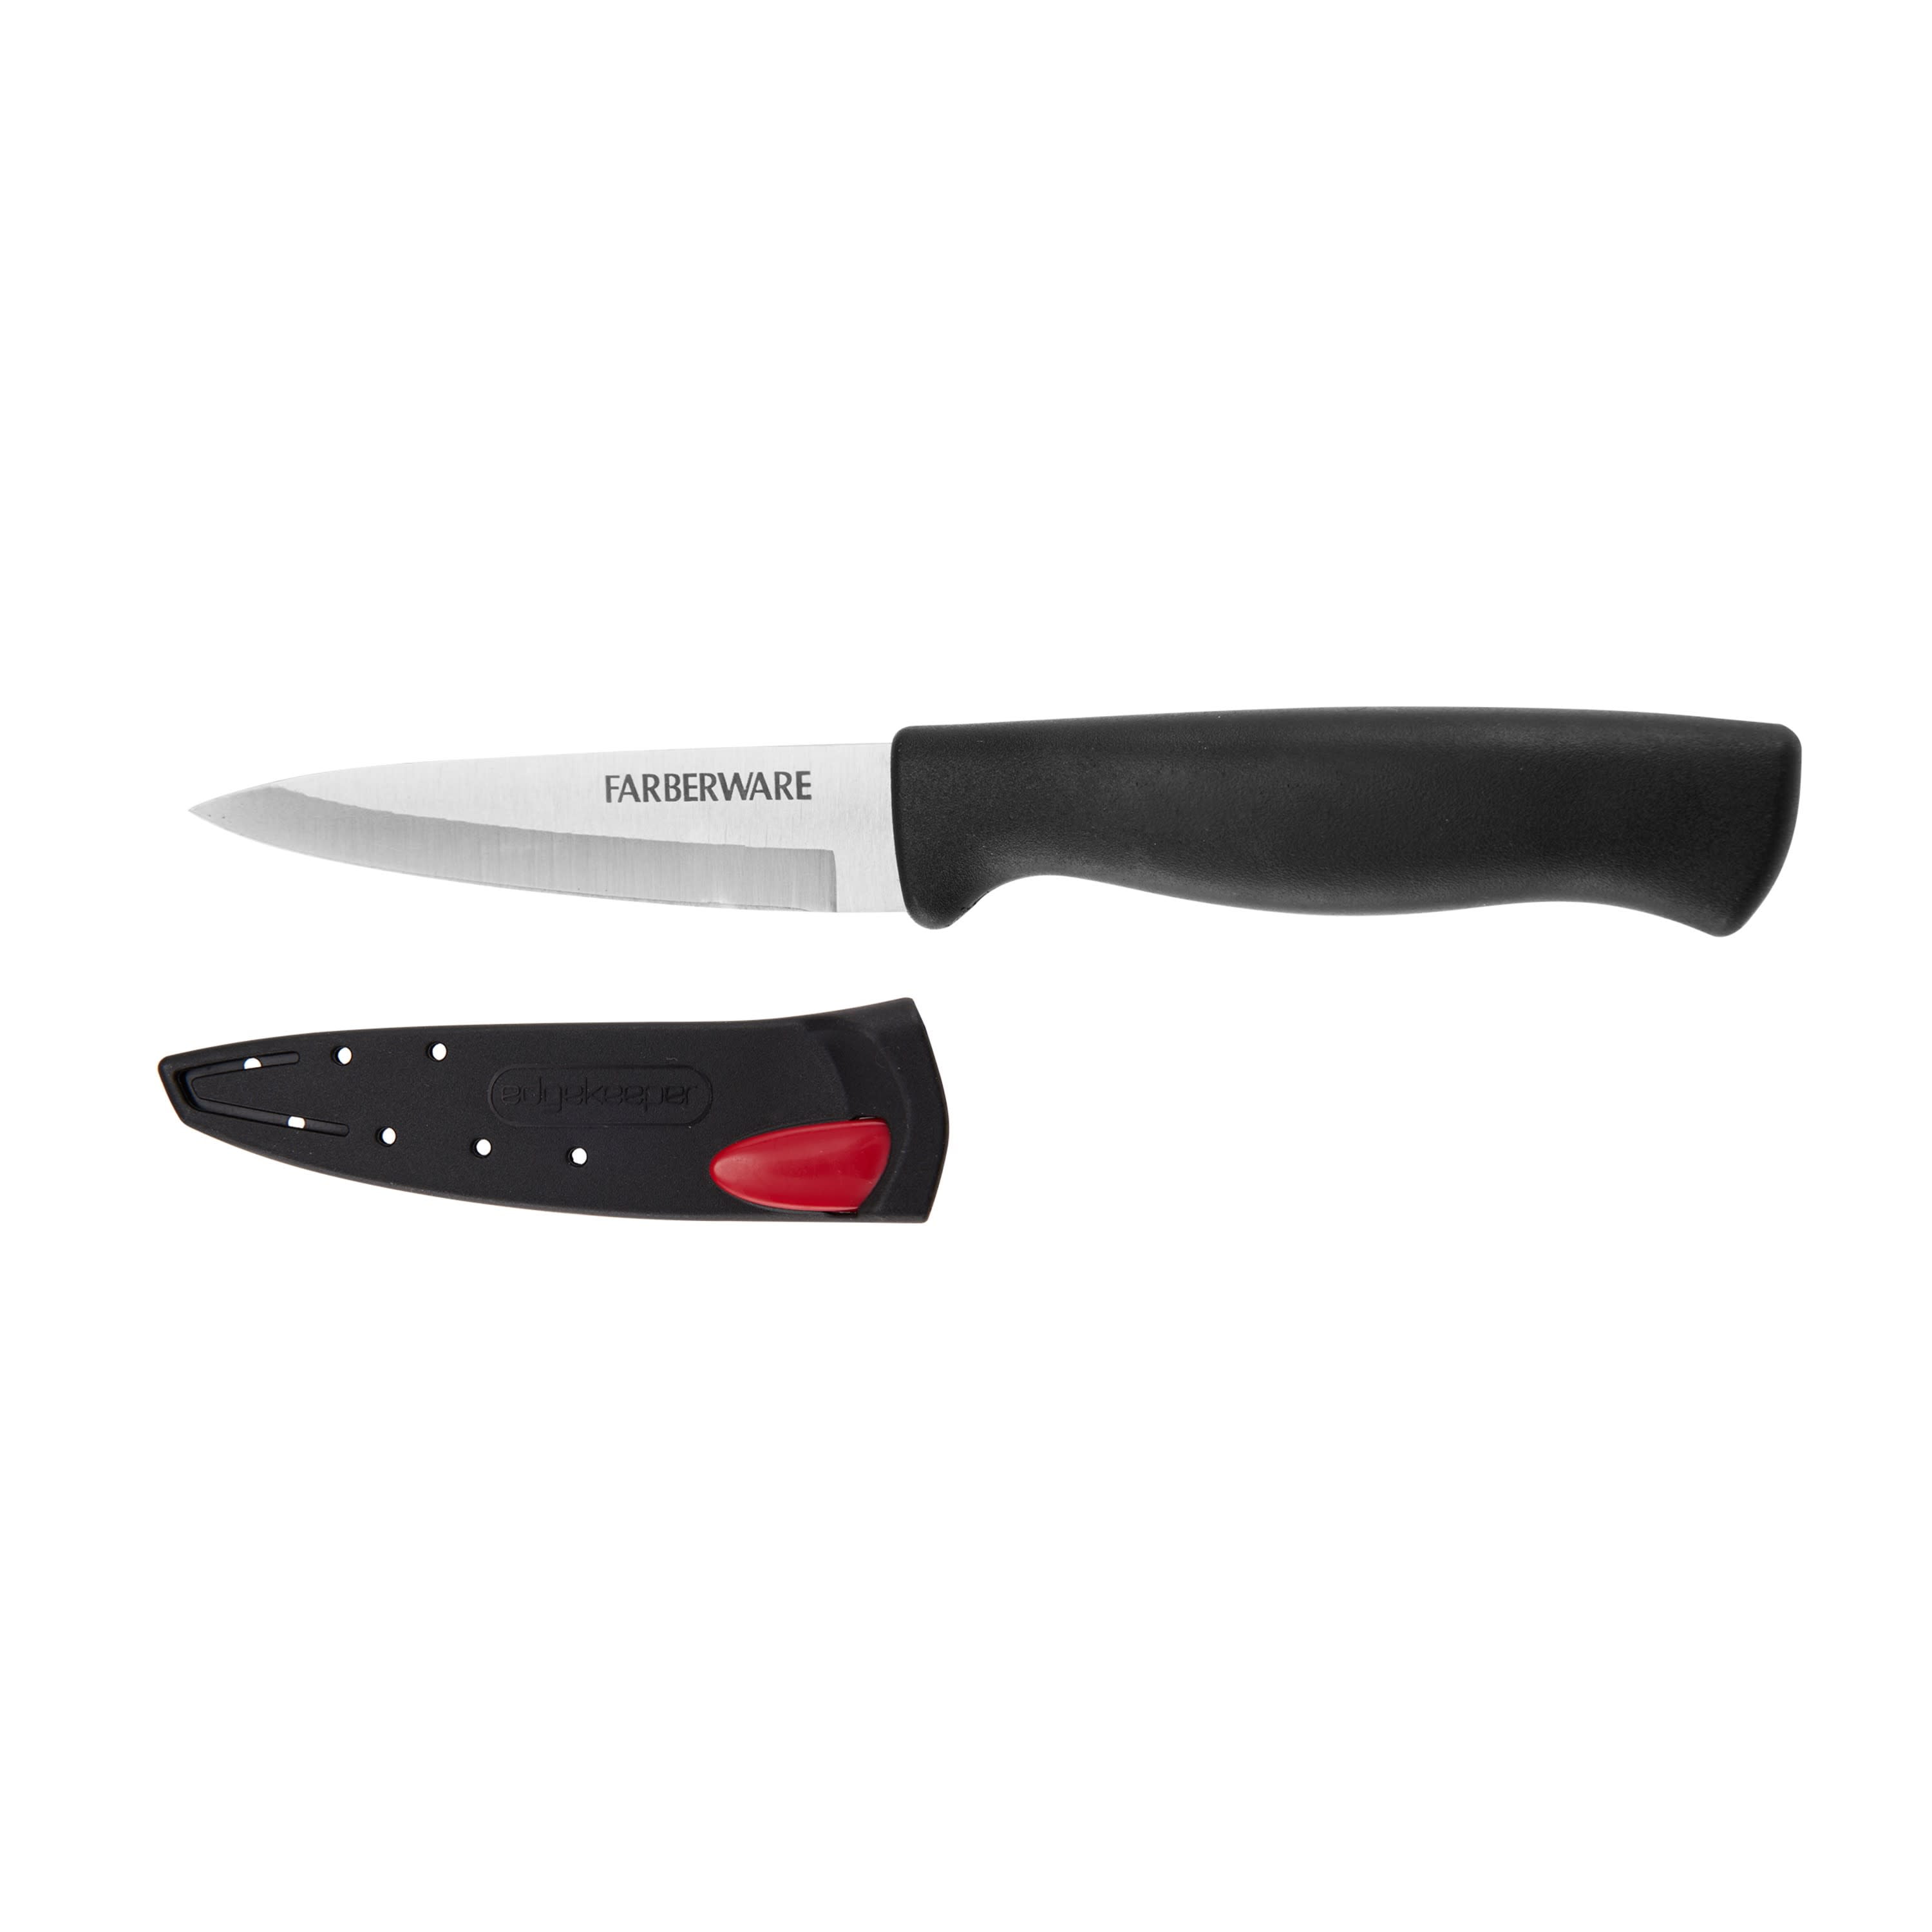 Farberware Edgekeeper З 1/2 Inch Paring Knife with Self Sharpening